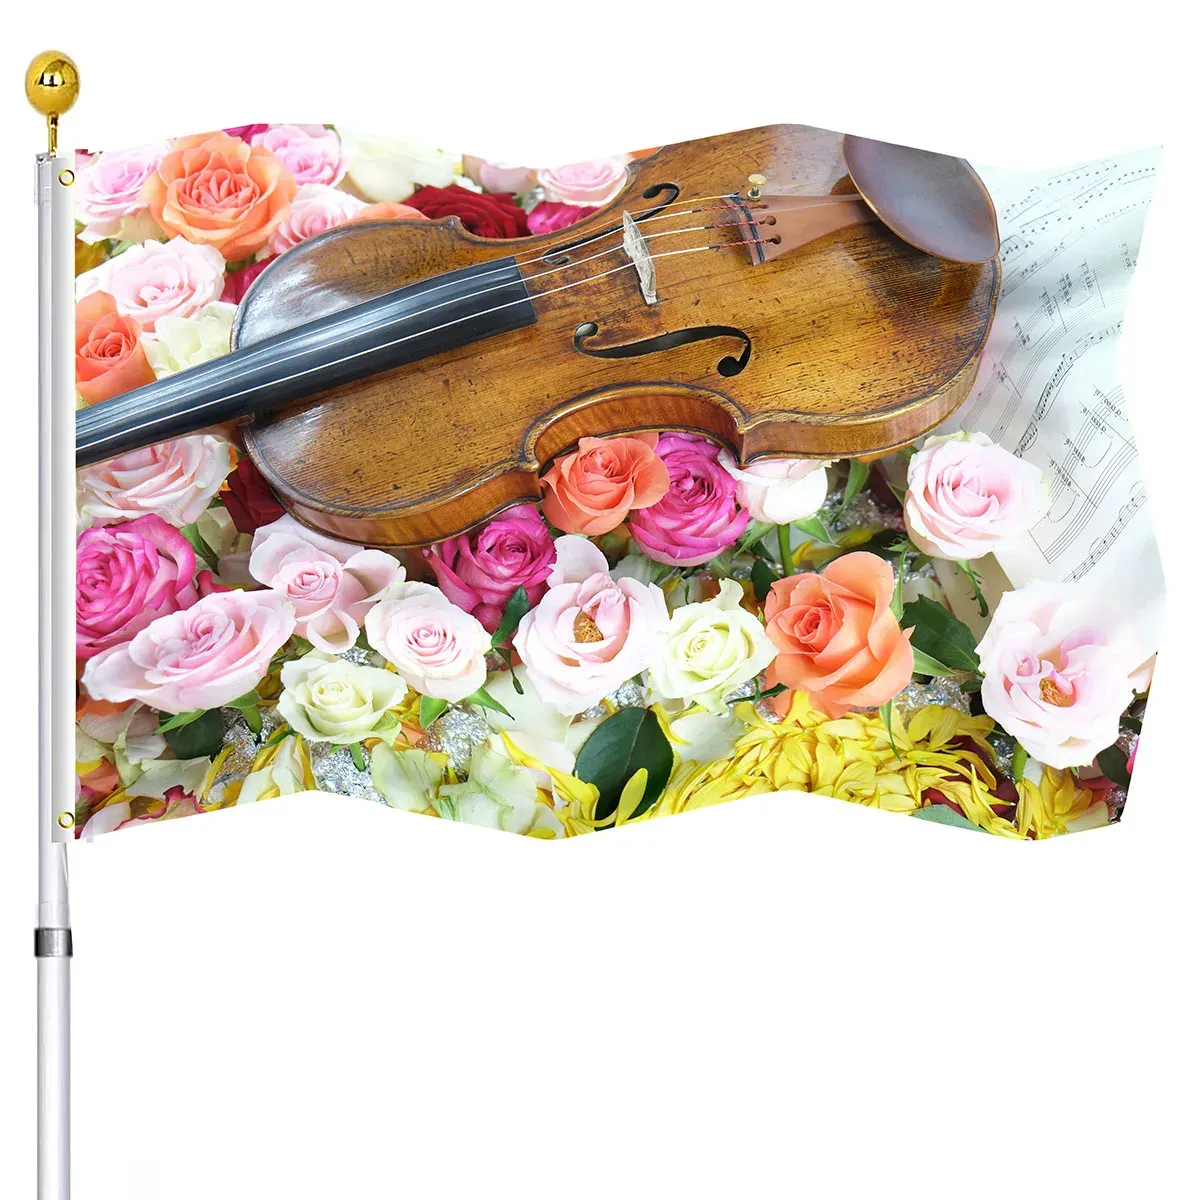 Tillbehör Violin Not Musik Flagg Vivid Rose Flowers Double Stitched Flags Banners med mässing GROMMETS HUS IN INHOOR Outdoor Decorations